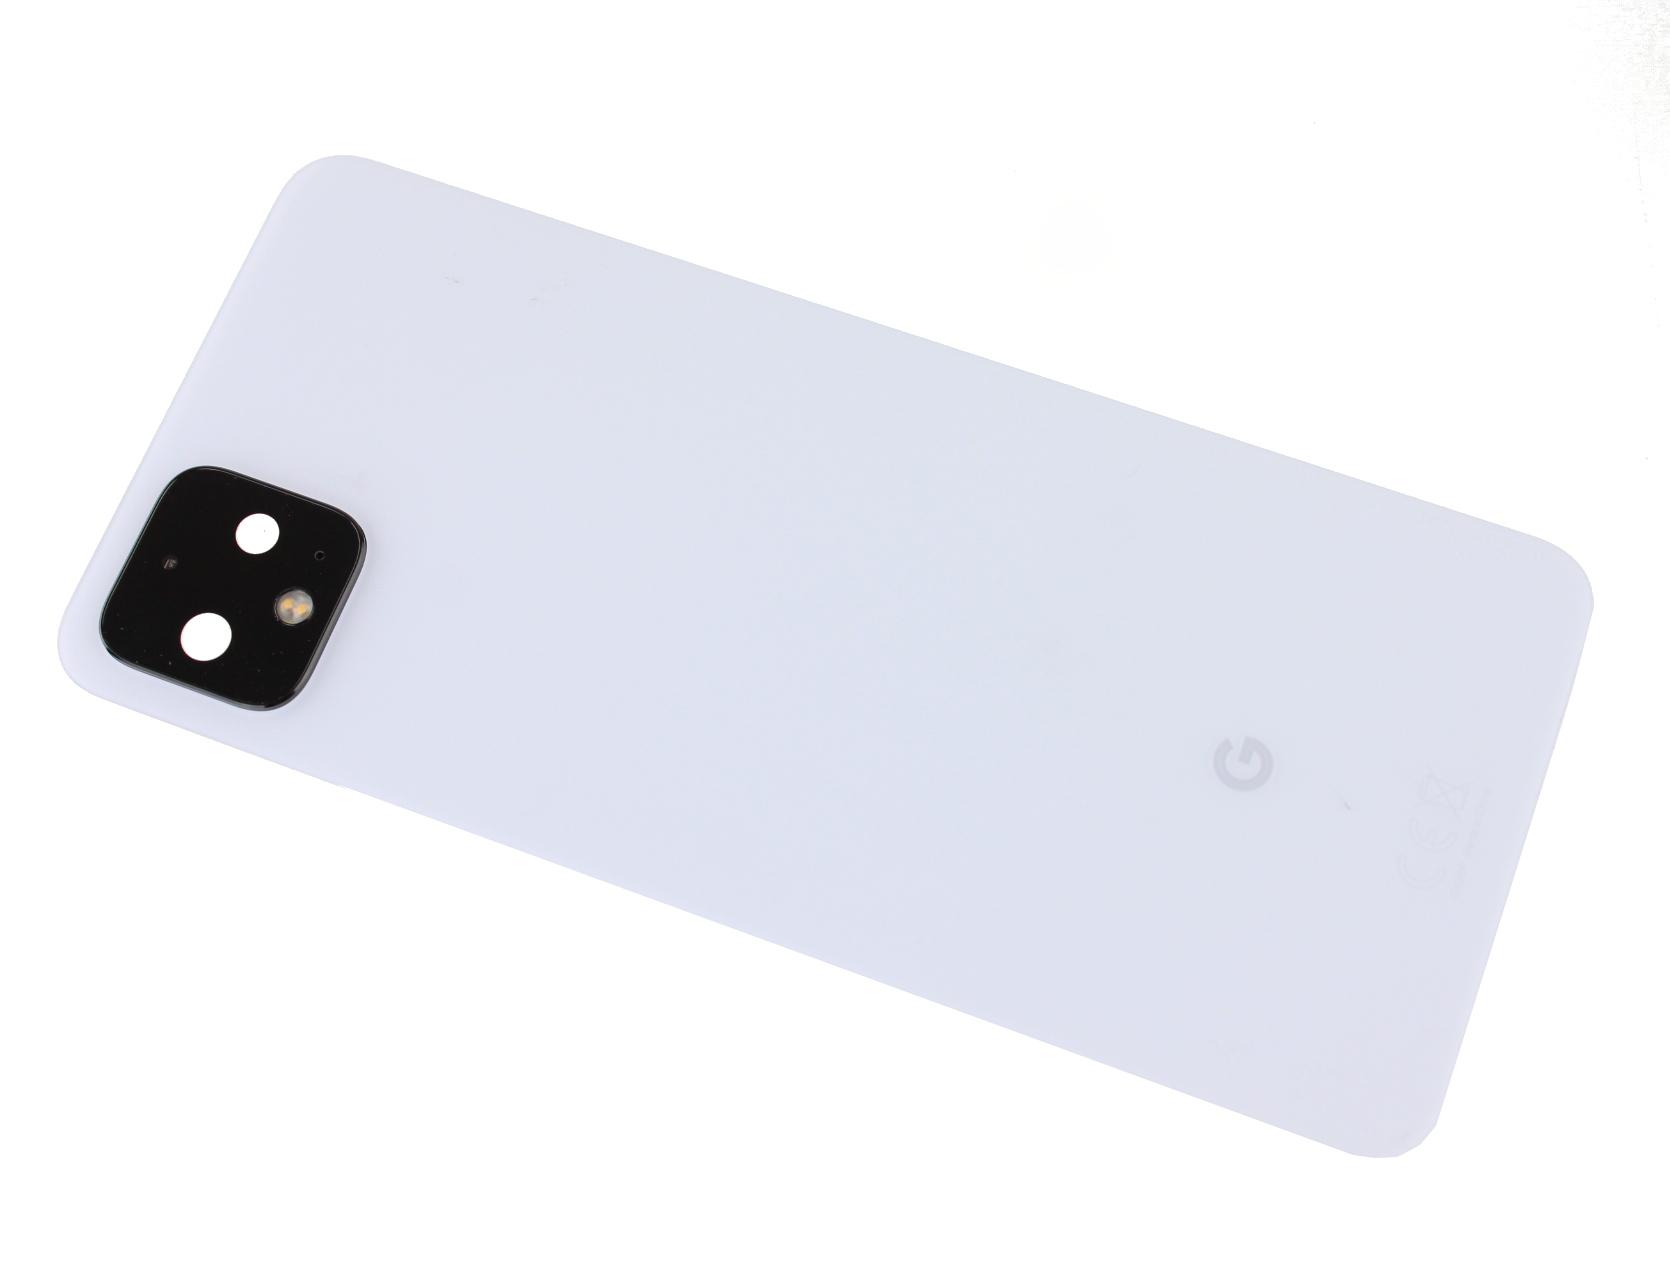 Originál kryt baterie Google Pixel 4 XL G020P bílý - demontvaný díl